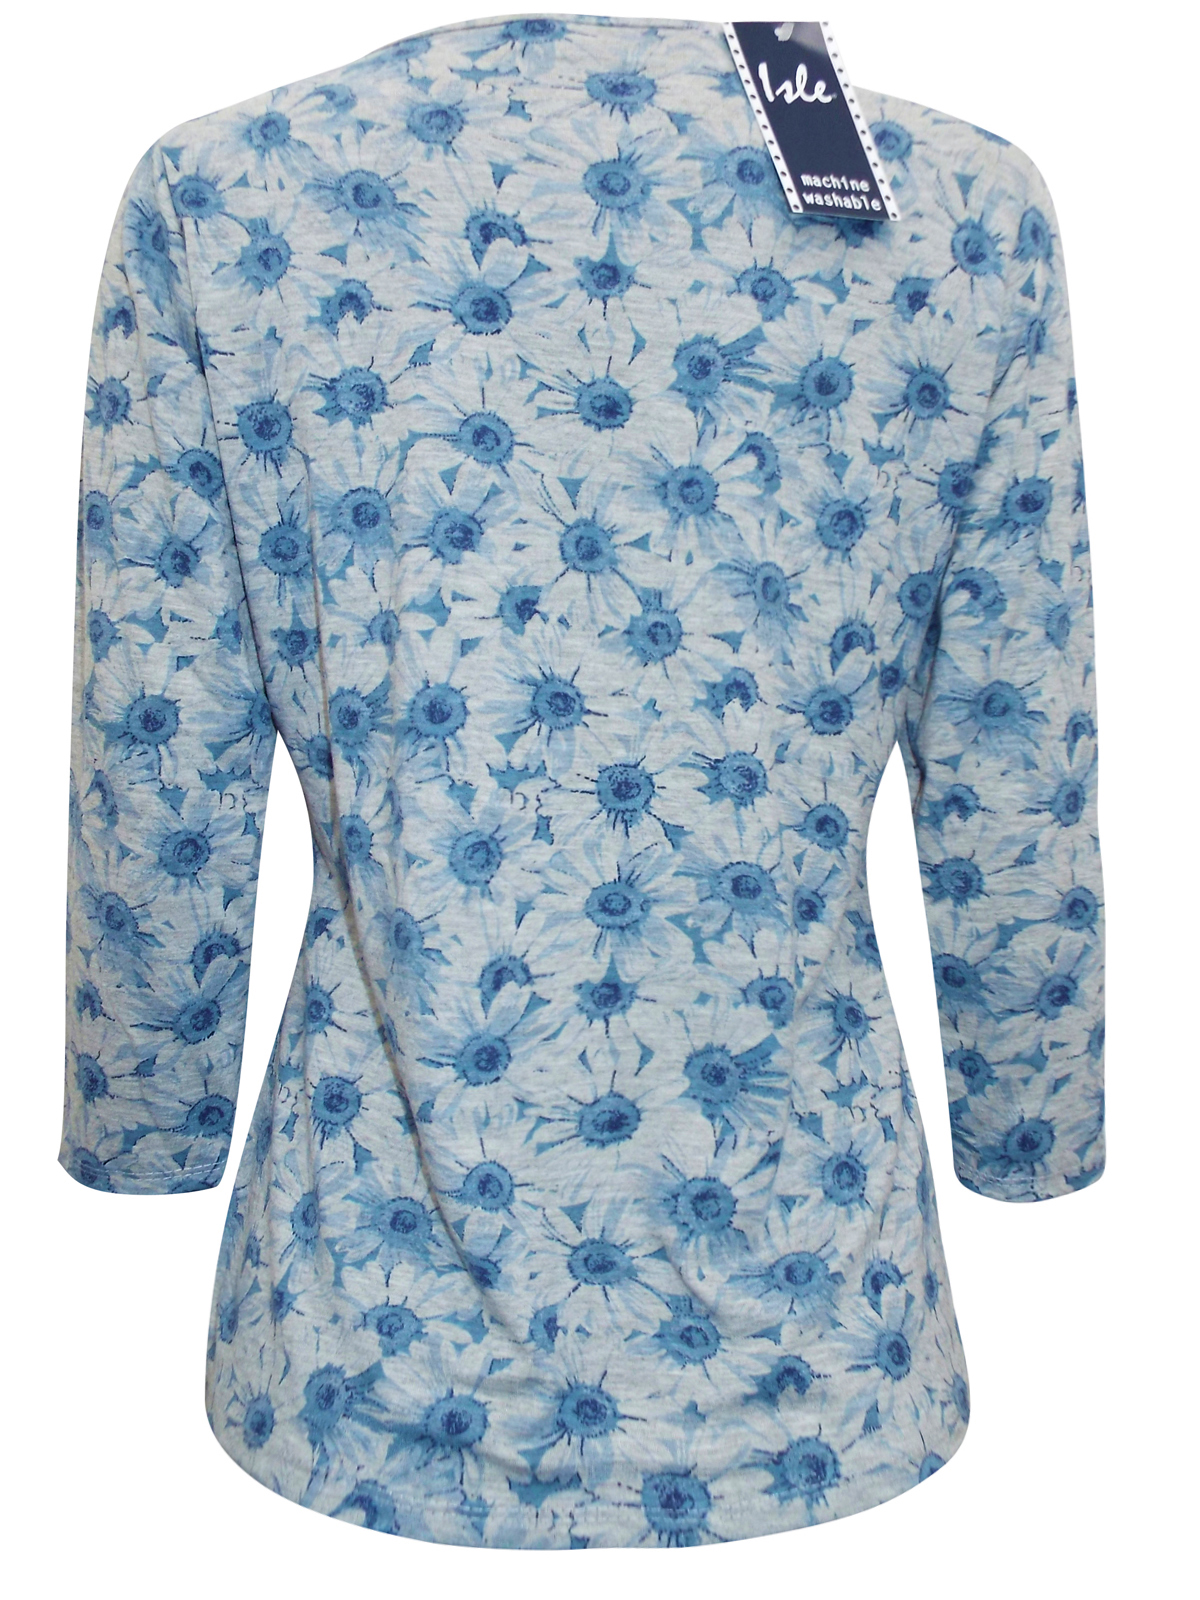 Brand New Wholesale Clothing by Isle - - Isle BLUE Daisy Print 3/4 ...